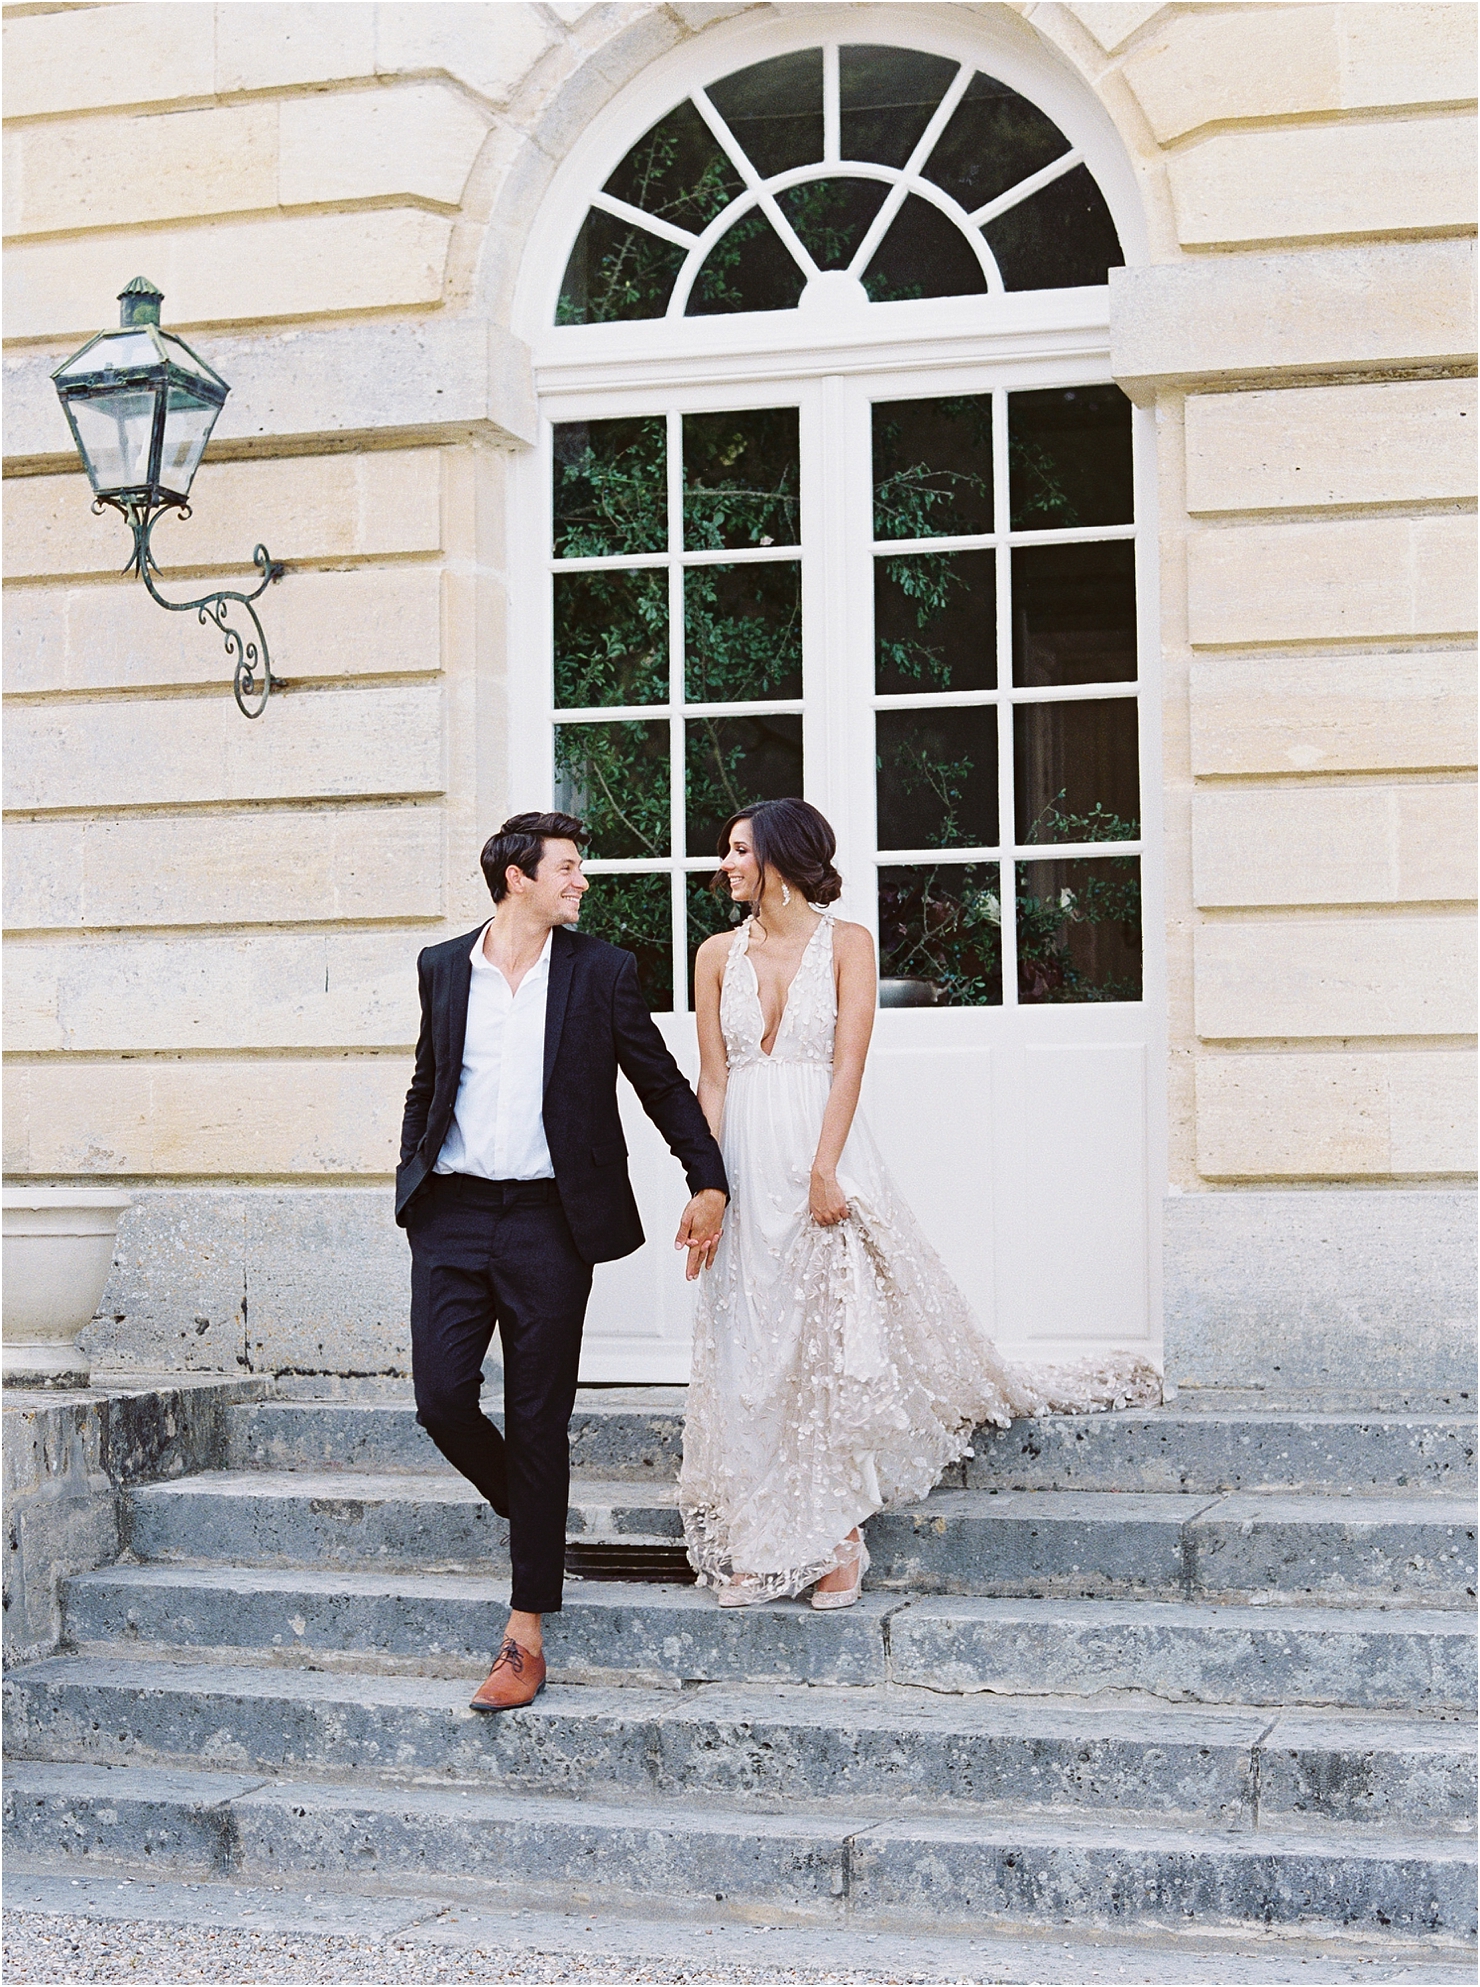 French Chateau Steps Wedding Exit